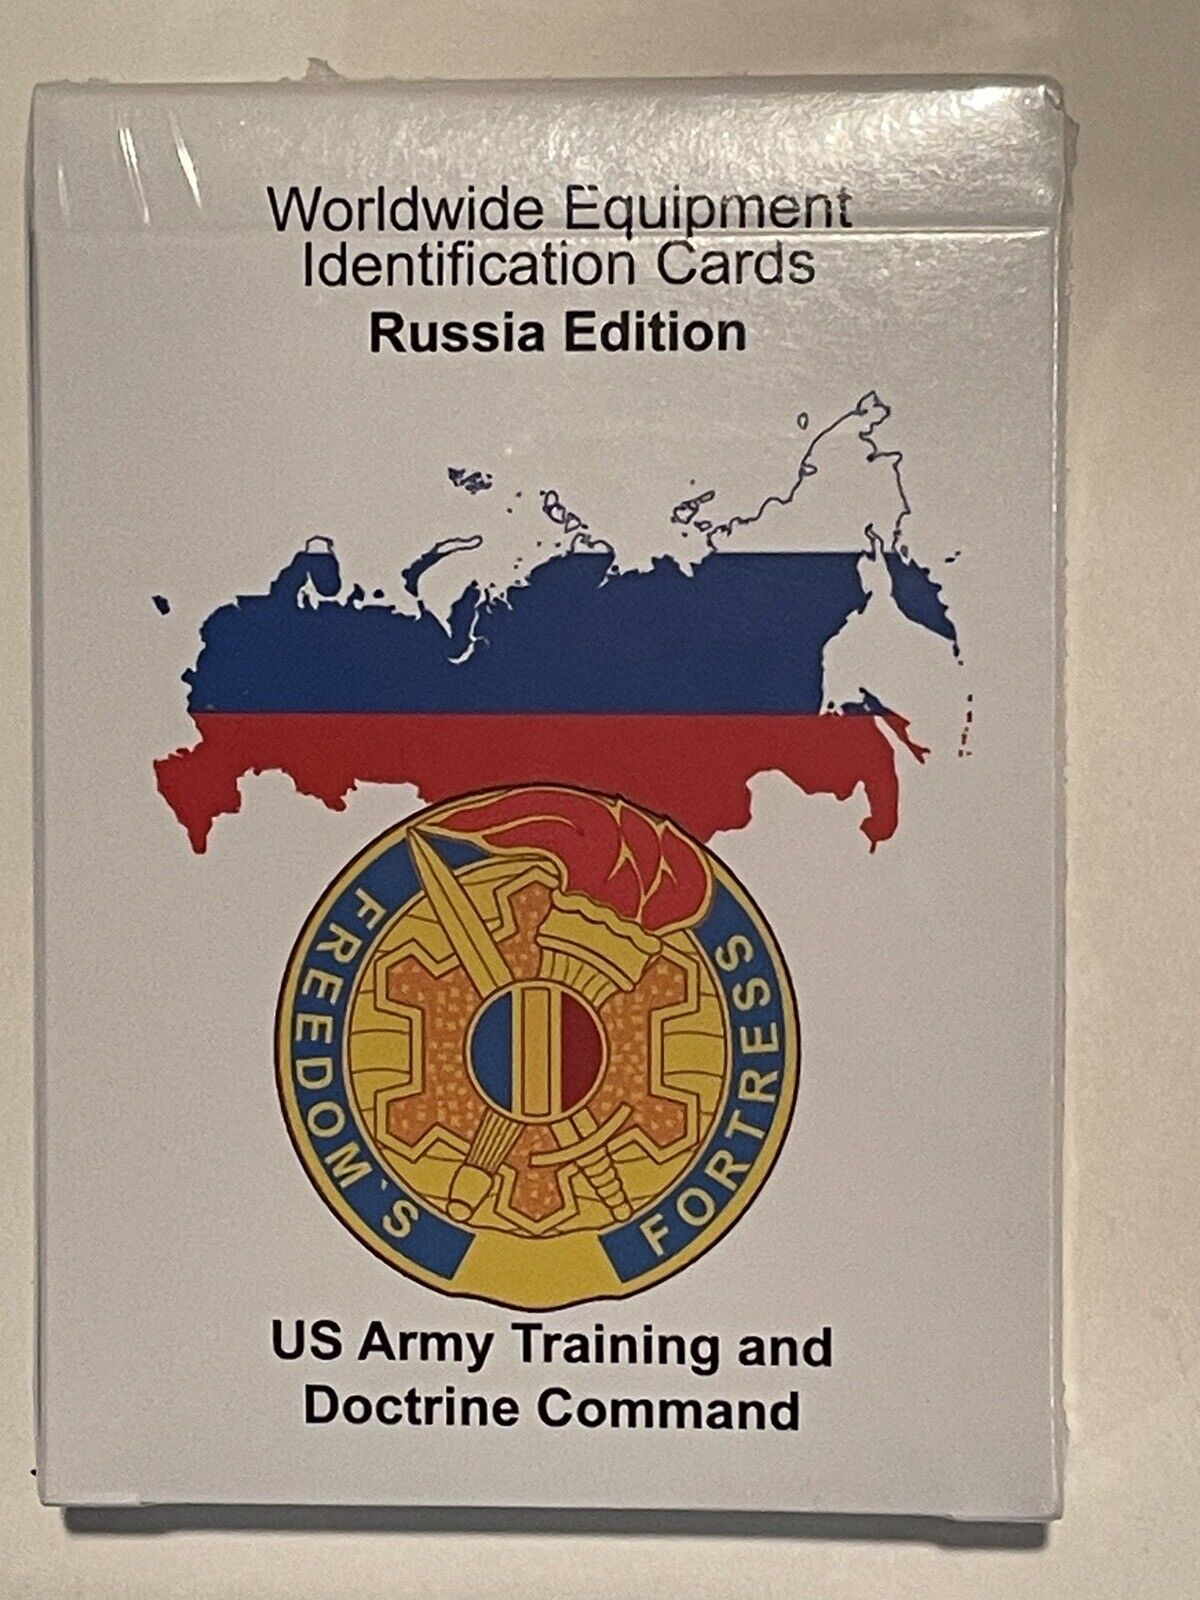 U.S. Army Equipment Cards Russia